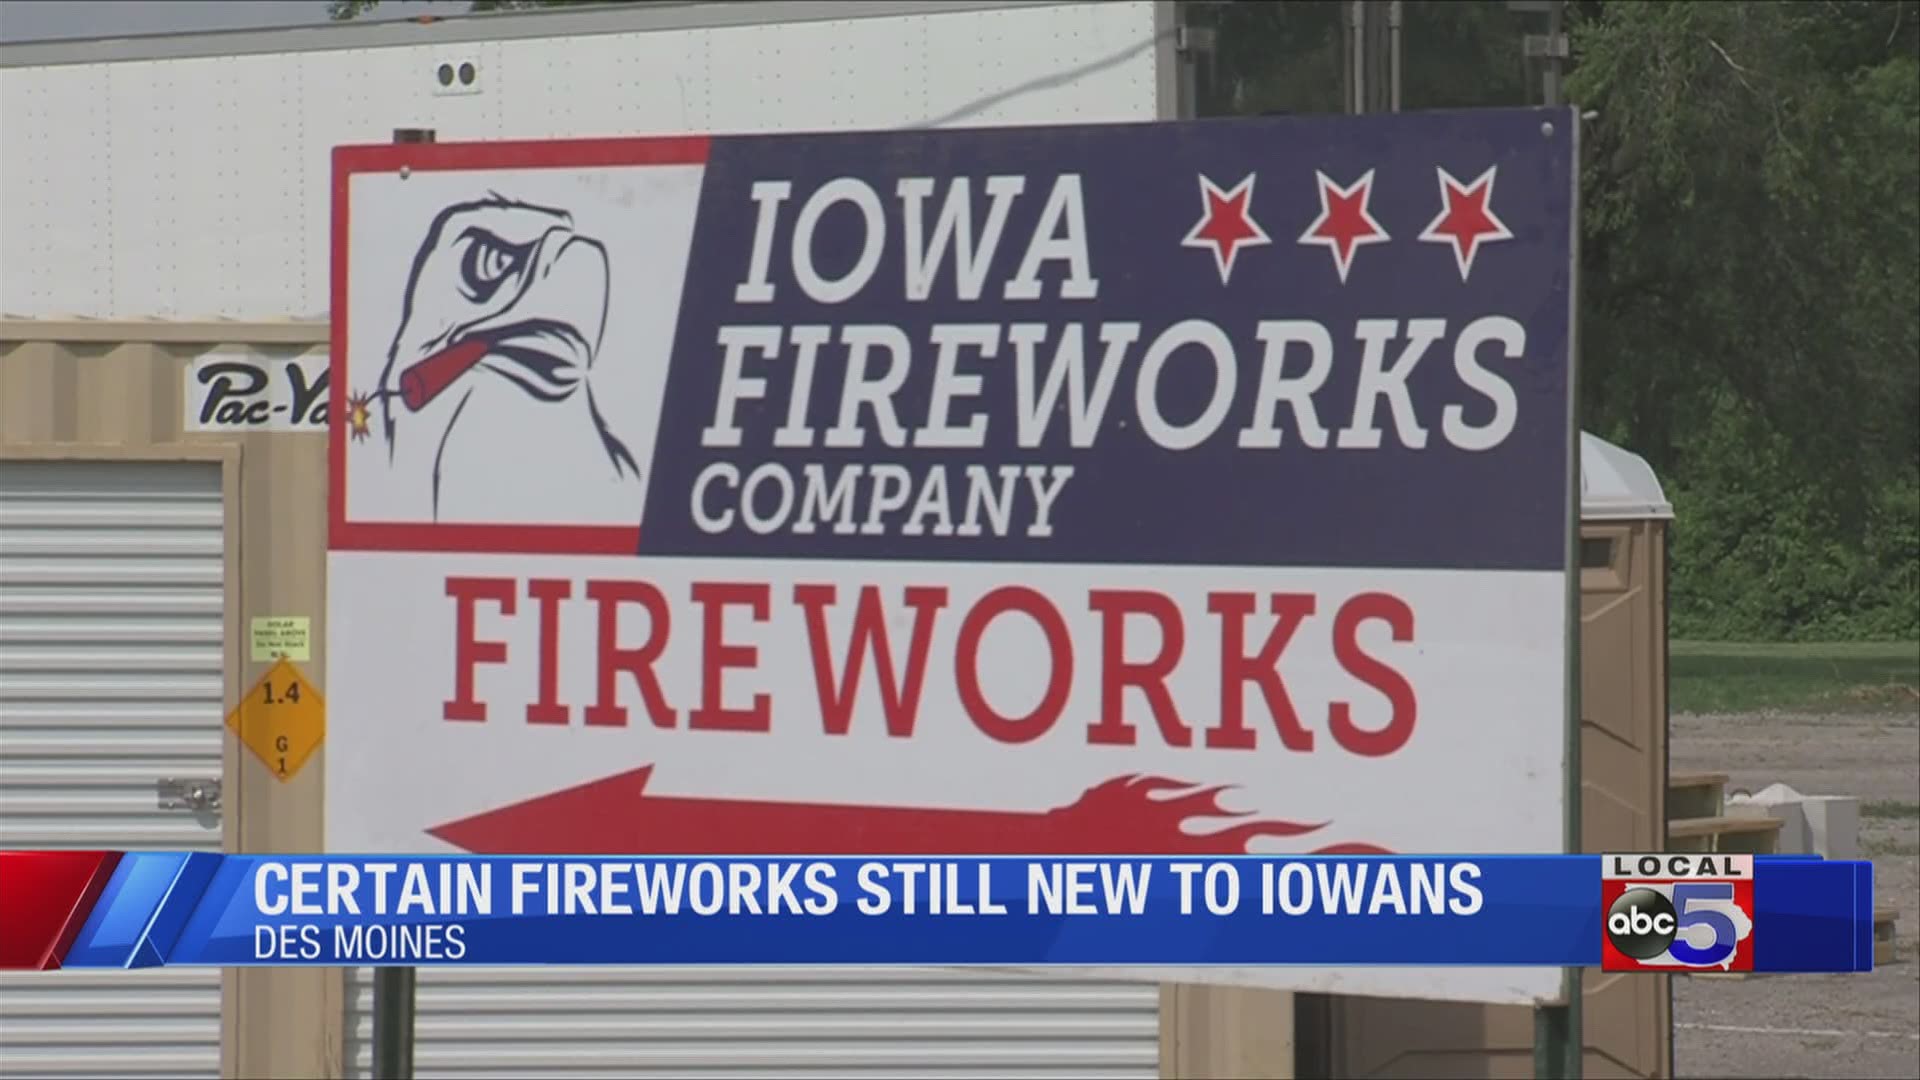 Iowa Fireworks Company shared how certain fireworks are still new to Iowans.